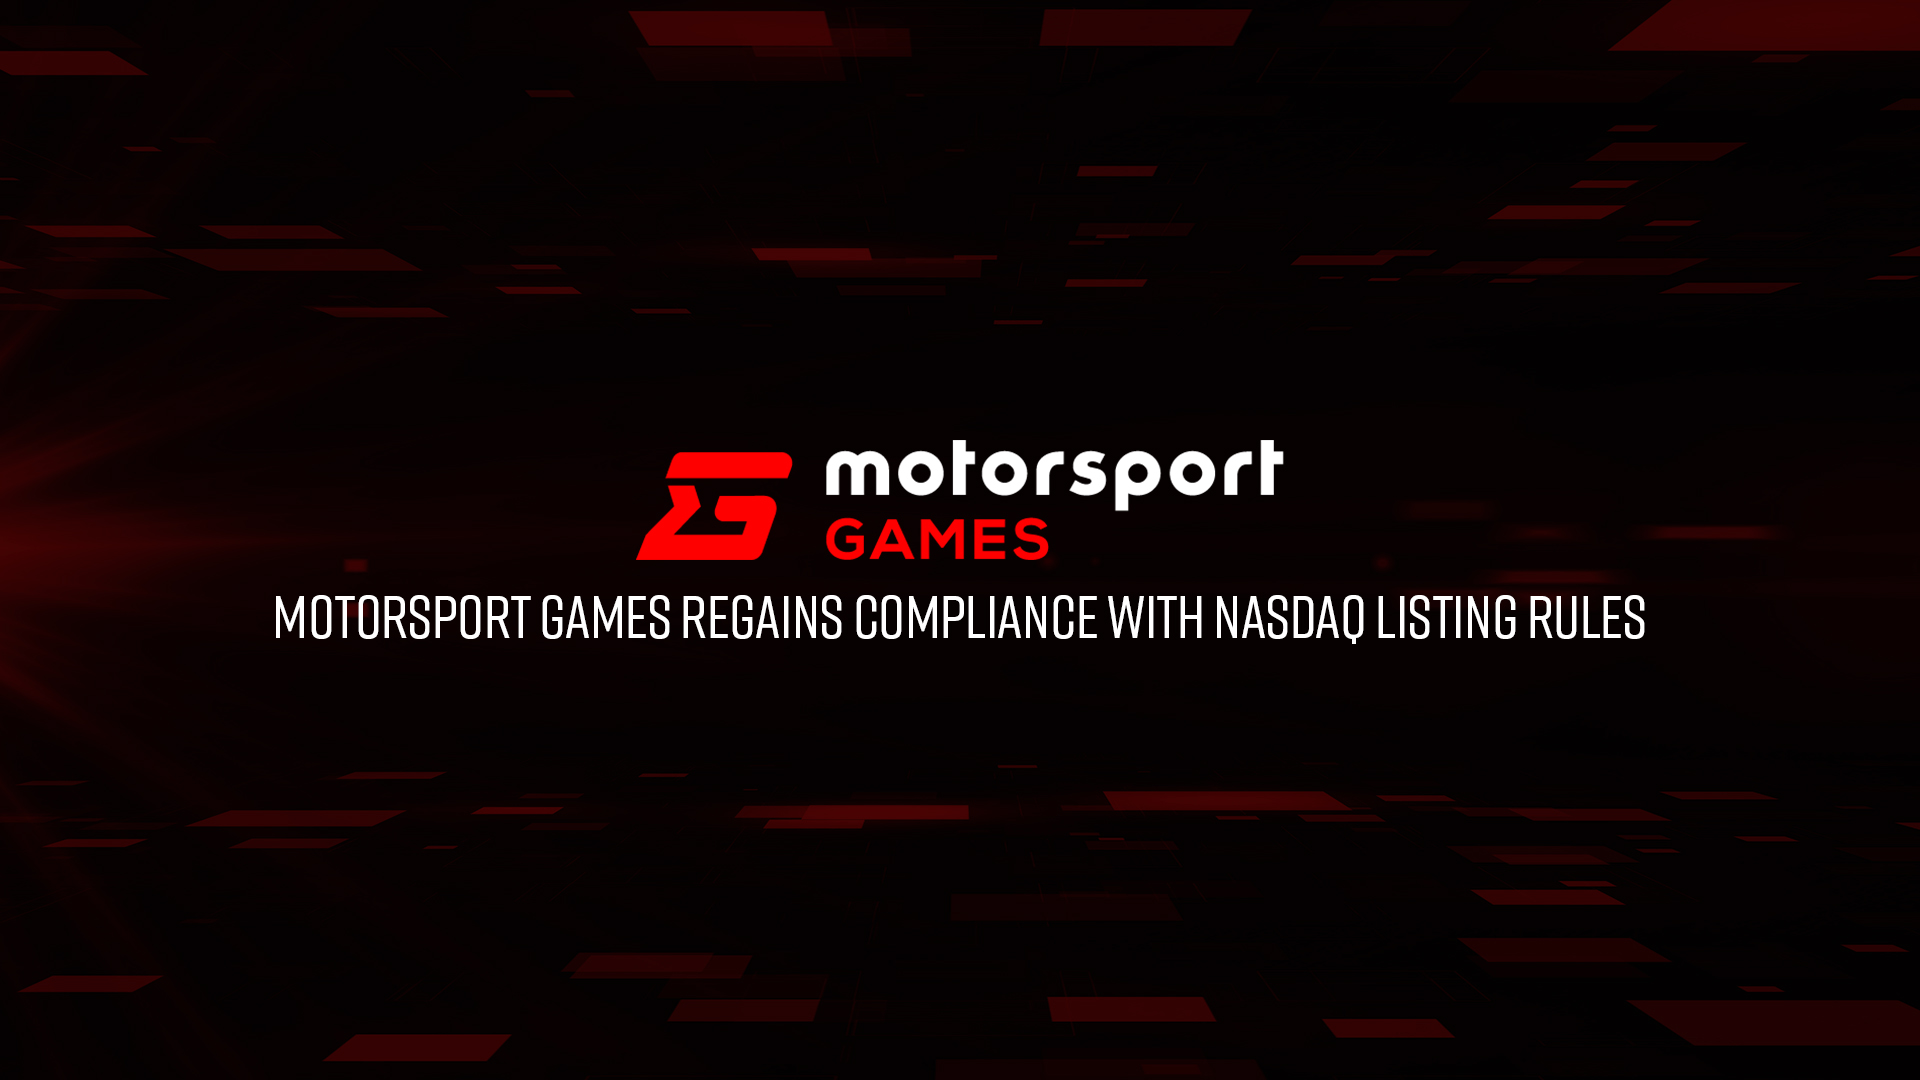 Motorsport Games Regains Compliance With NASDAQ Listing Rules